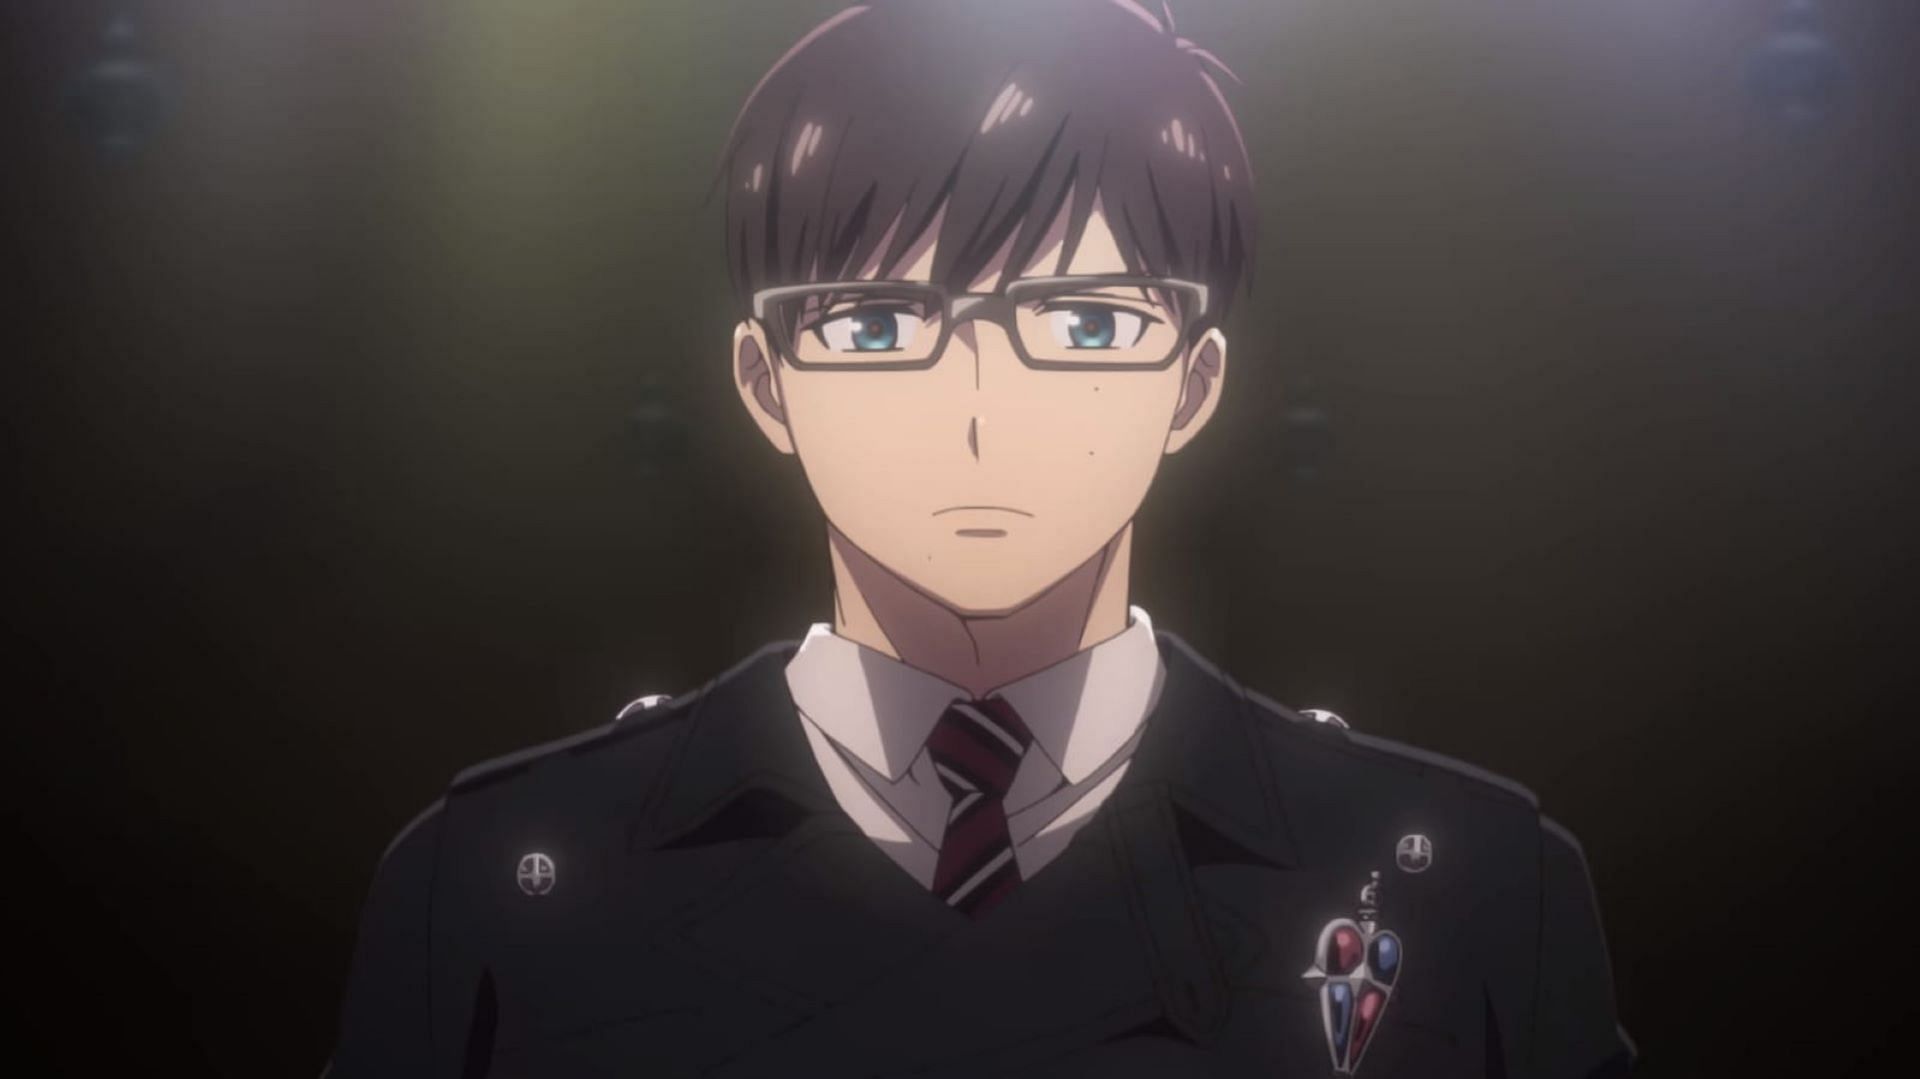 Yukio as seen in the episode (Image via Studio VOLN)